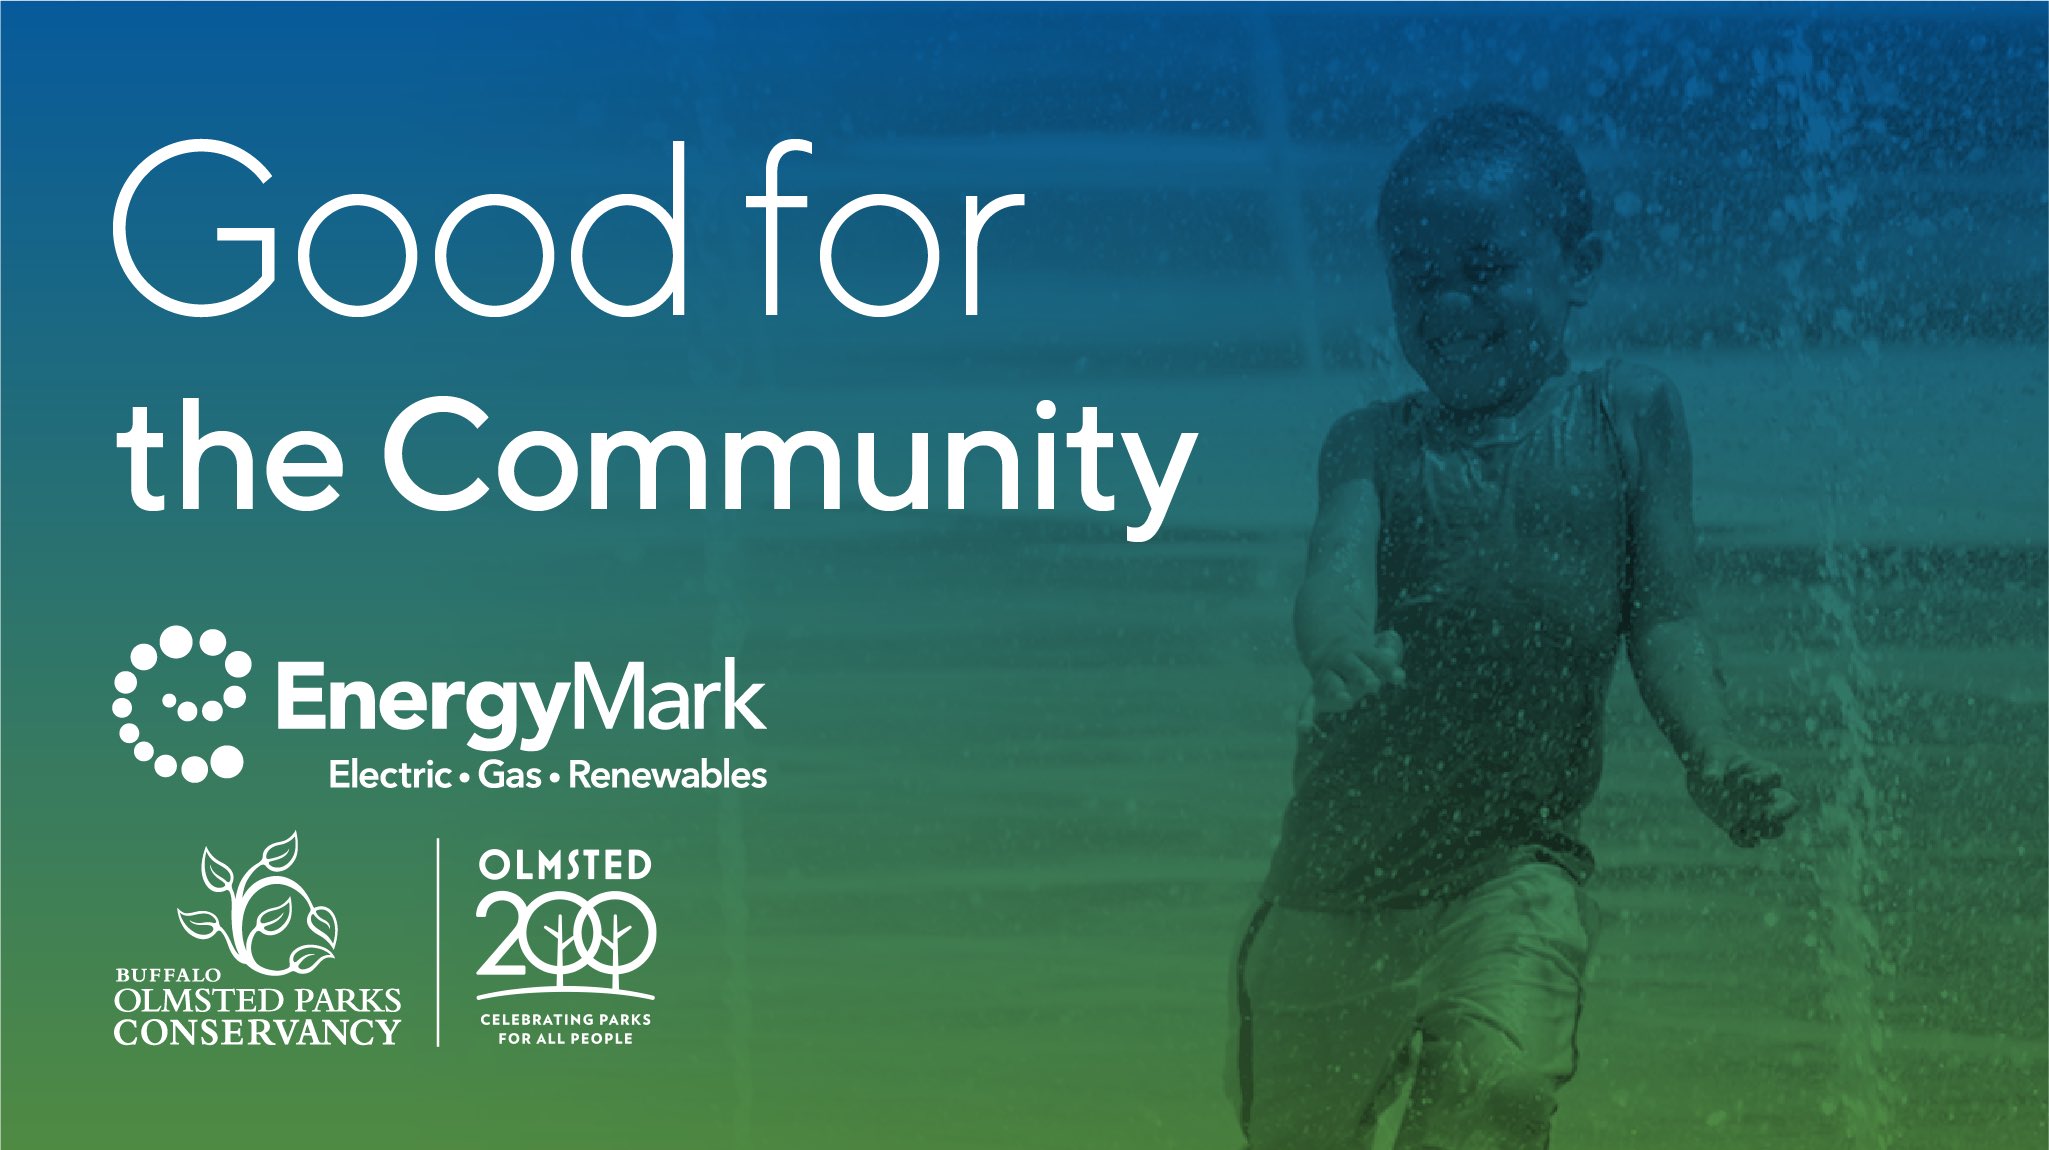 EnergyMark Good for Community